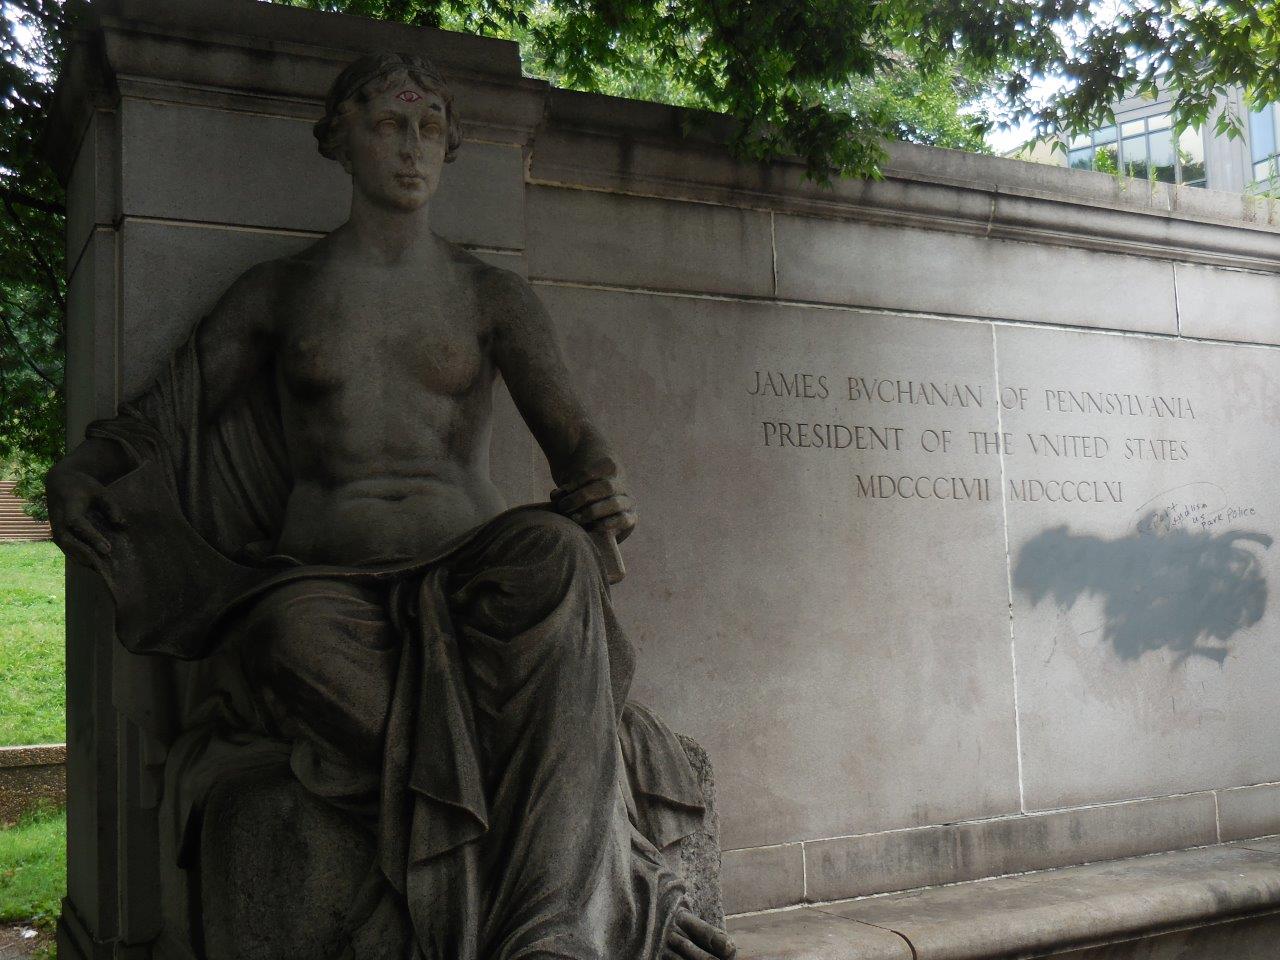 James Buchanan statue in Washington, D.C.